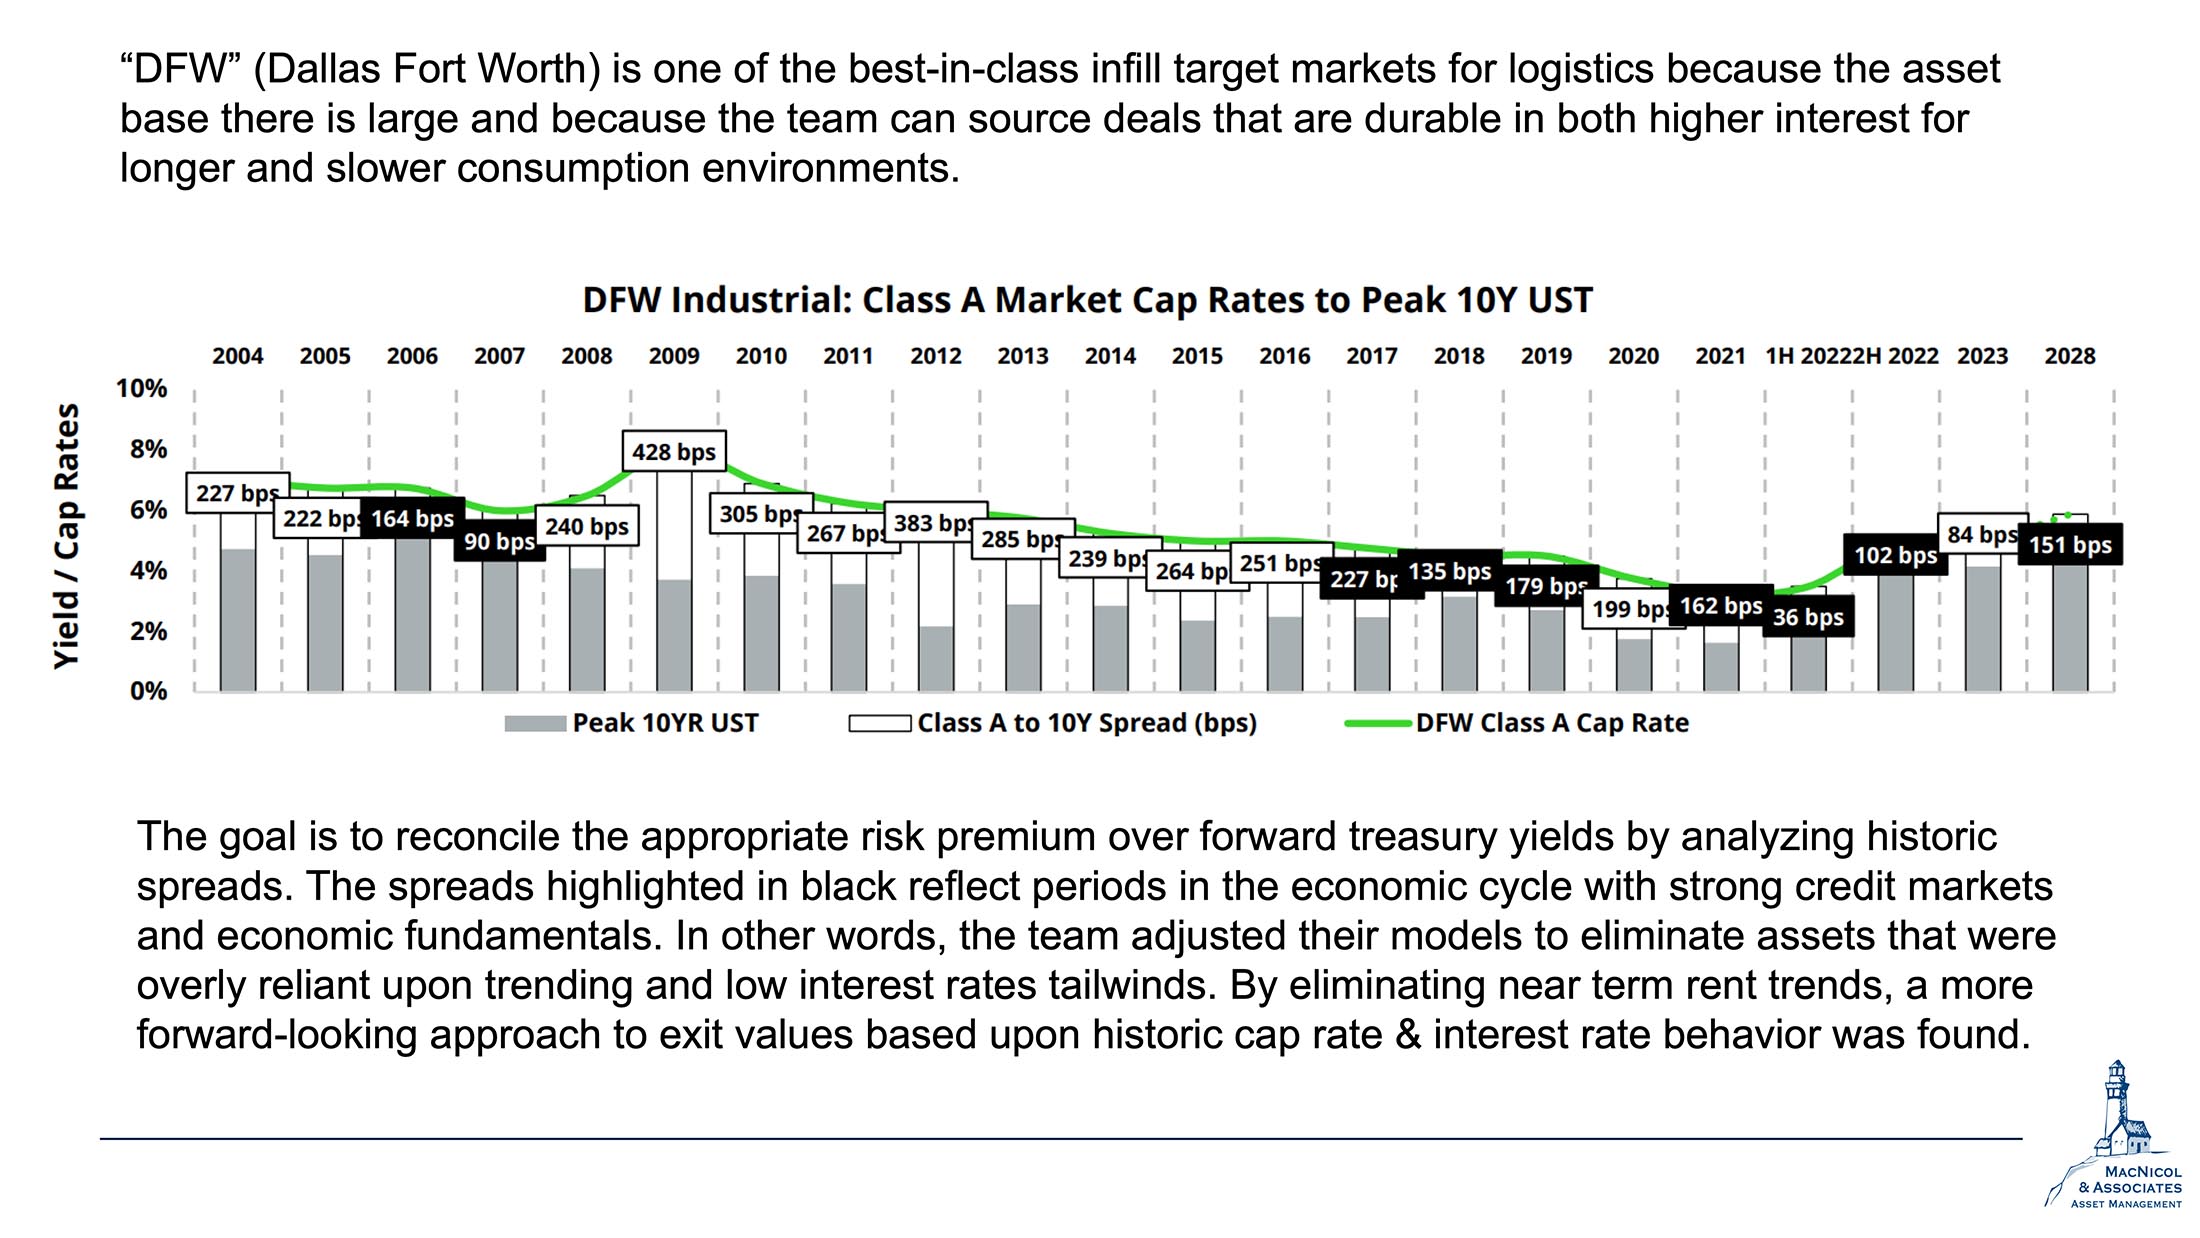 DFW Industrial - Class A Market Cap Rates to Peak 10Y UST